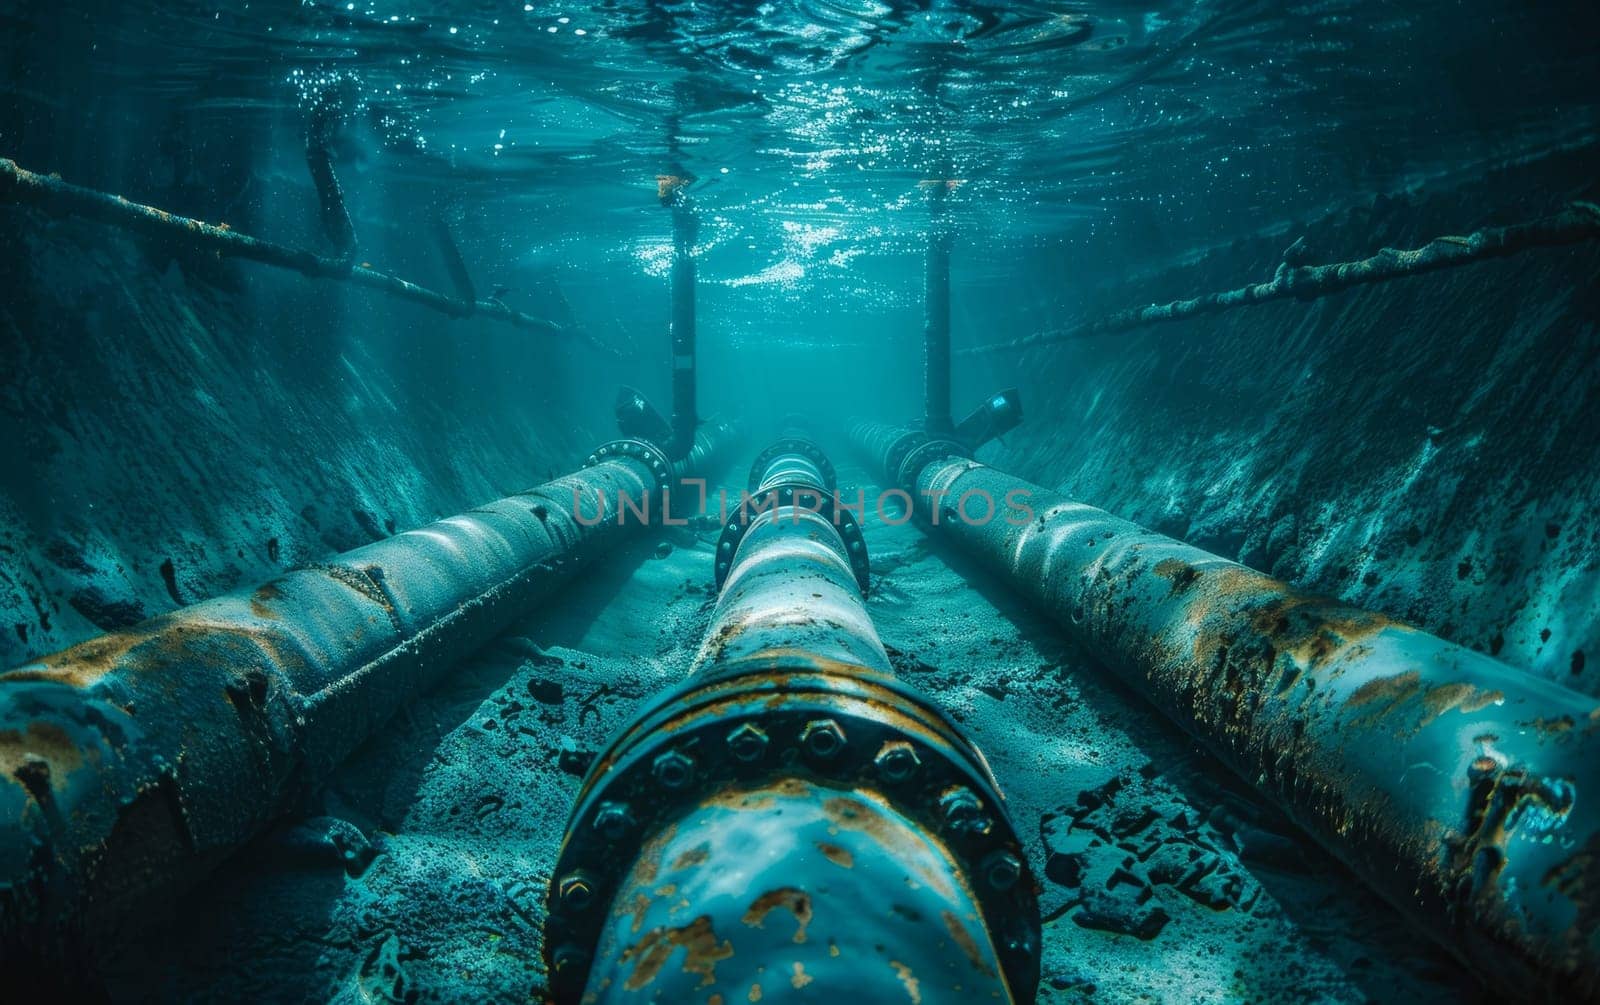 Underwater pipeline leading into ocean depths, sunlight filtering through surface.